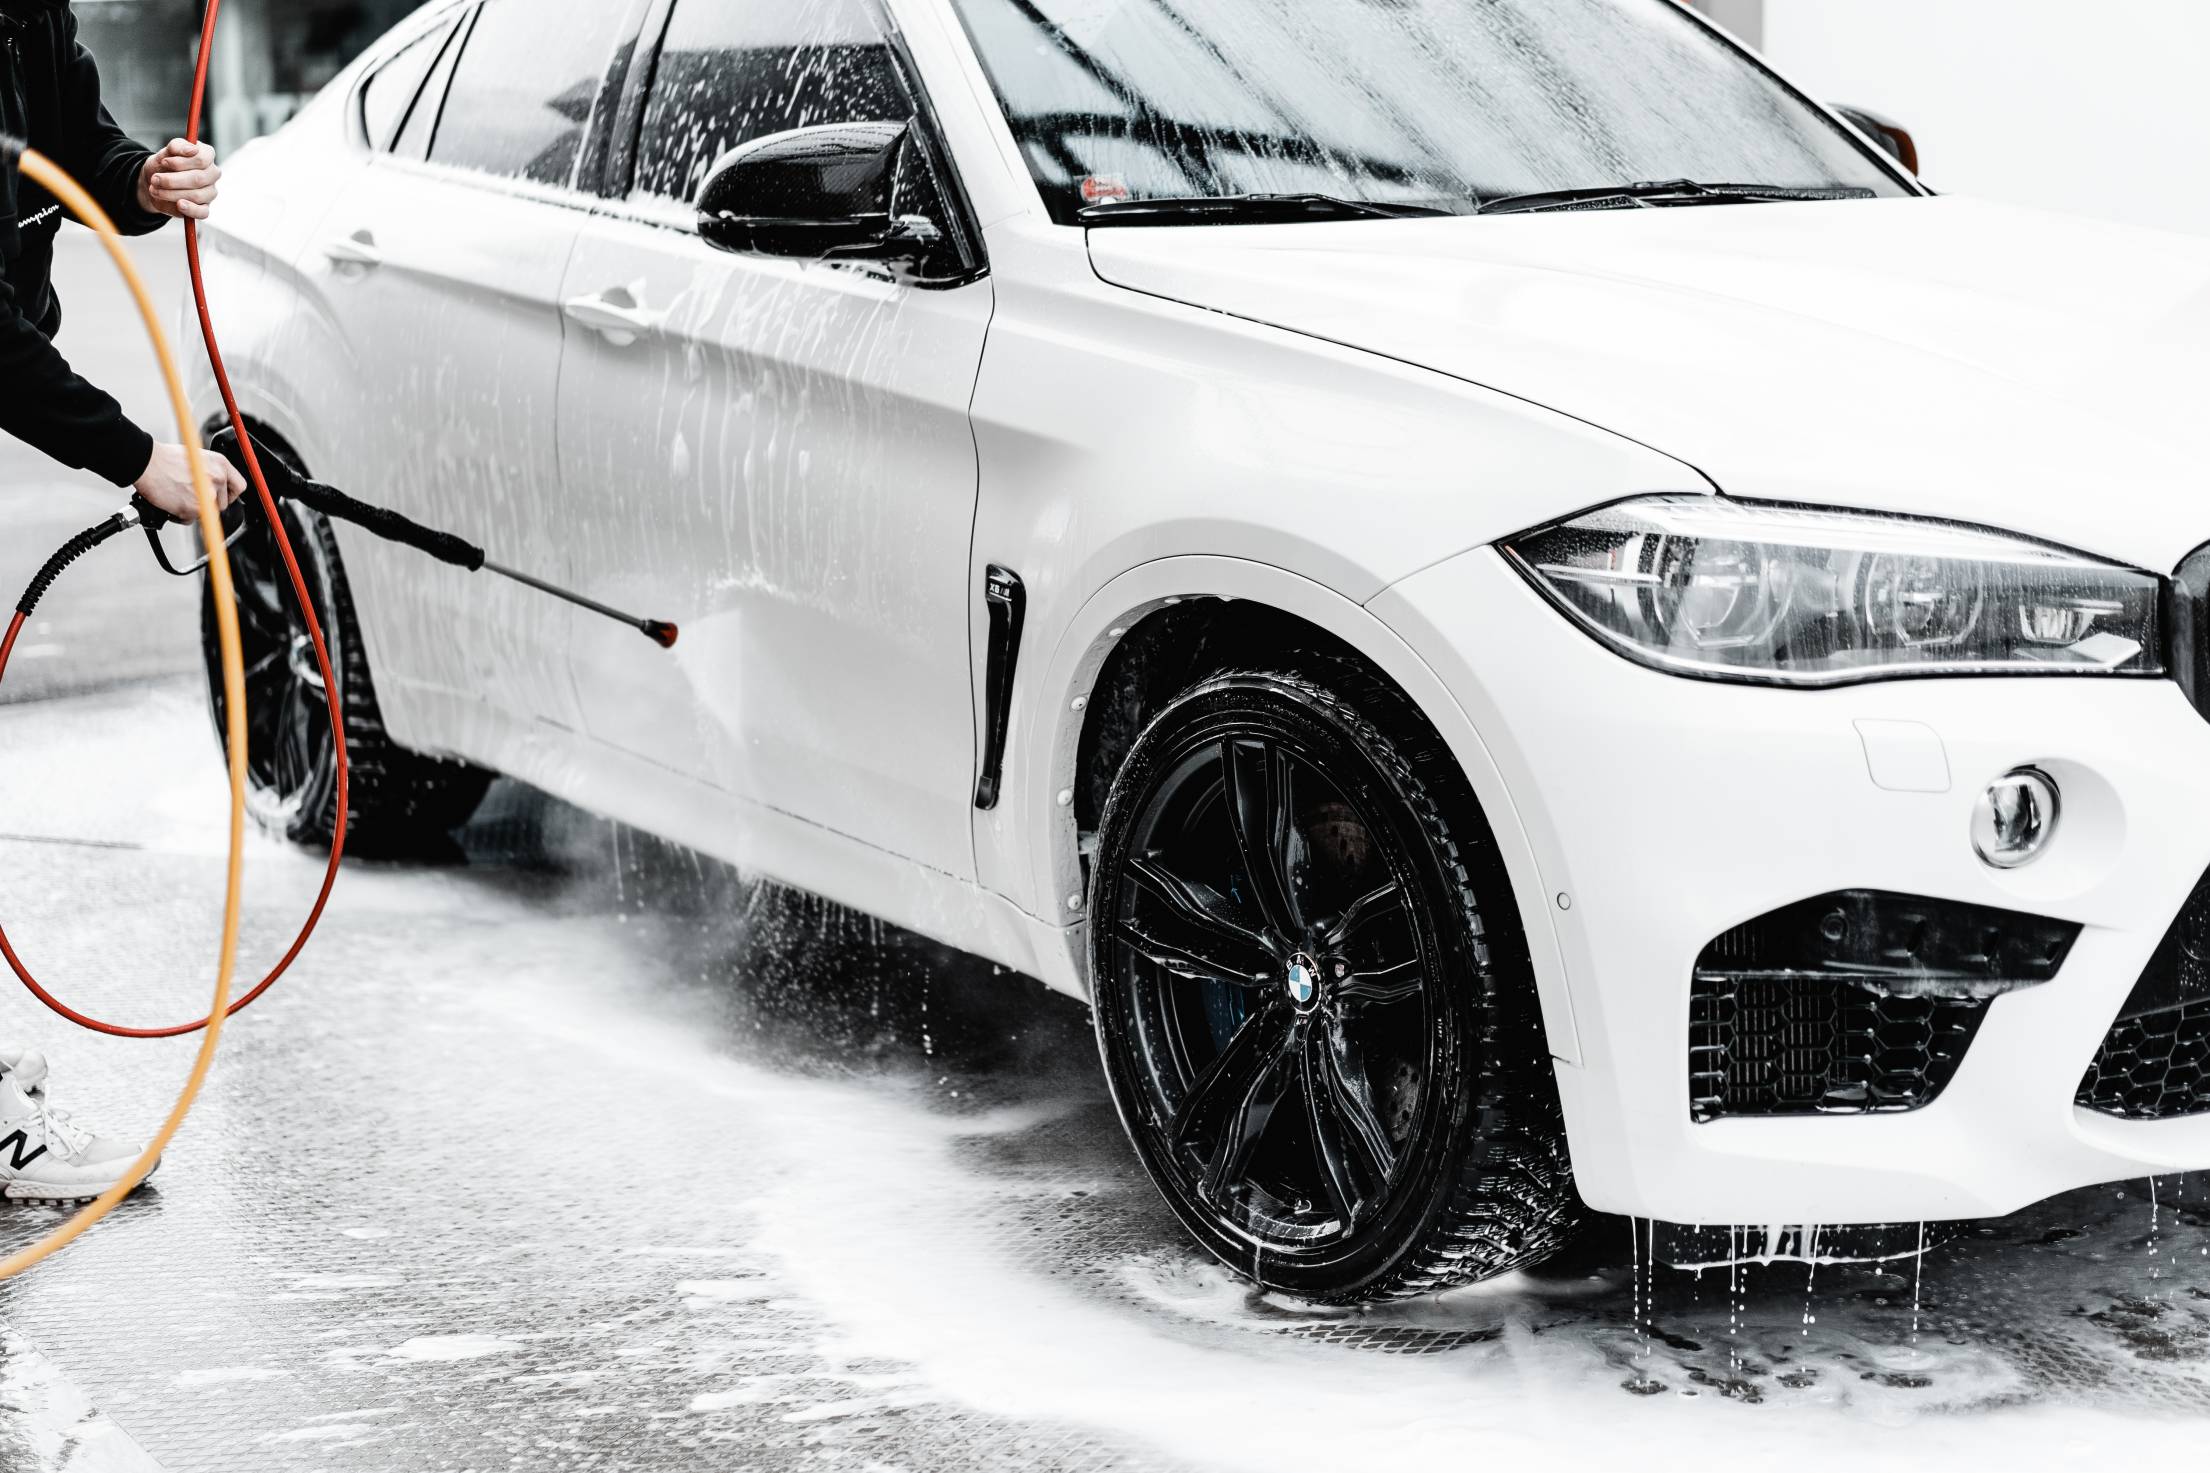 washing-white-suv-in-self-service-car-wash-with-a-wap-hose-free-photo.jpg